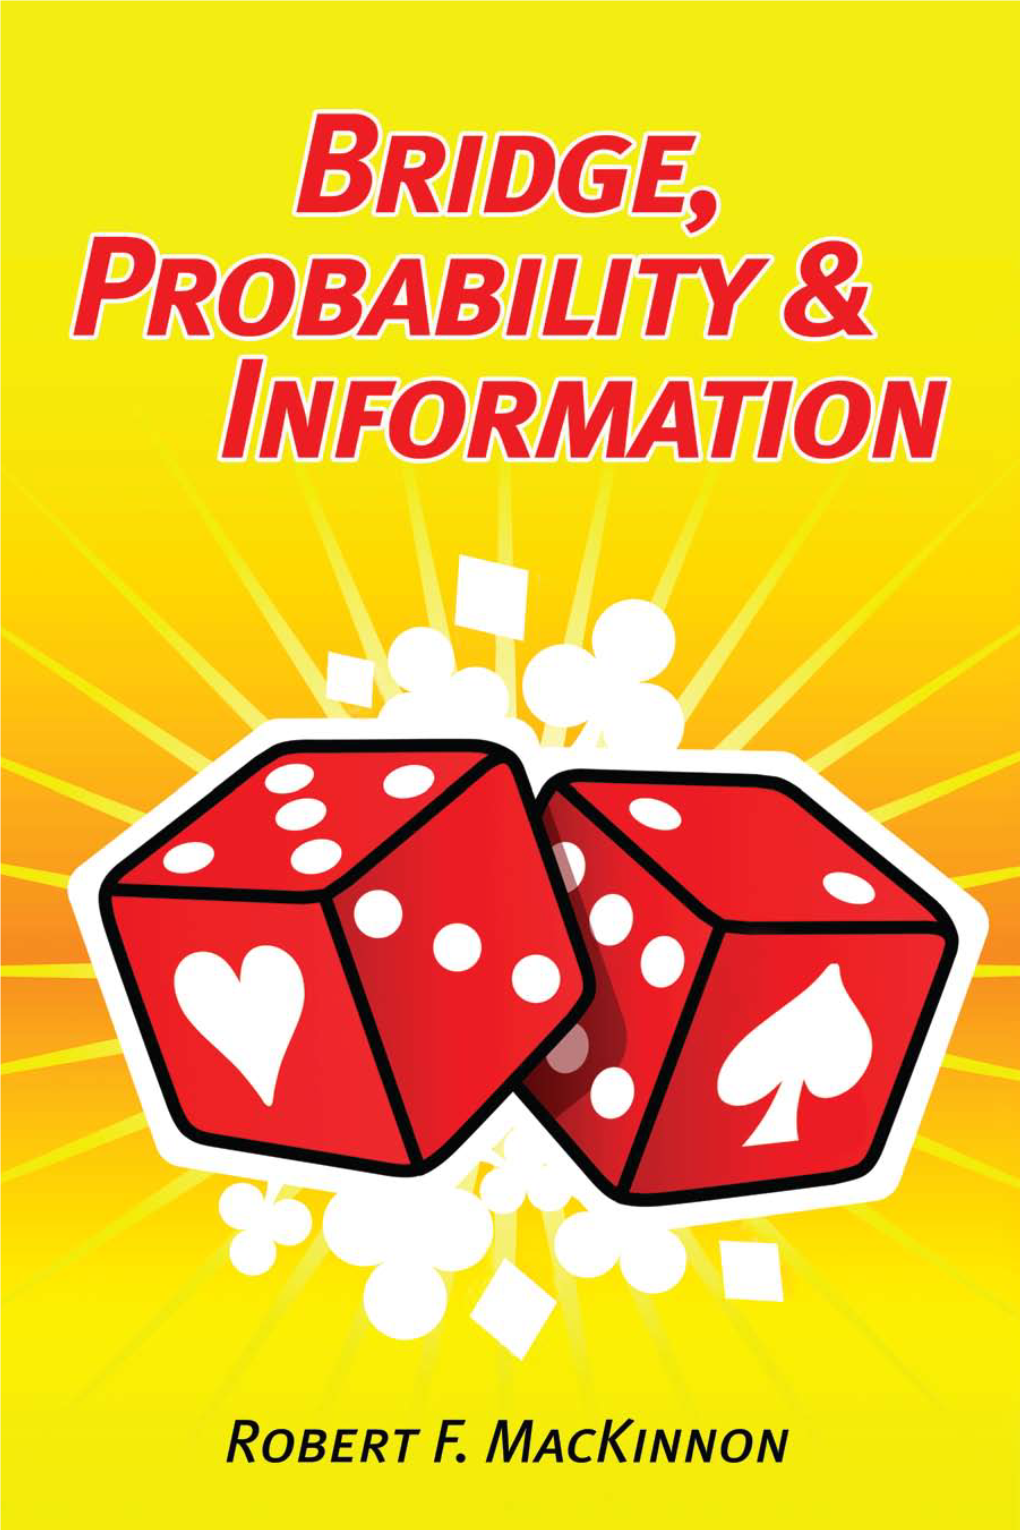 Bridge, Probability & Information